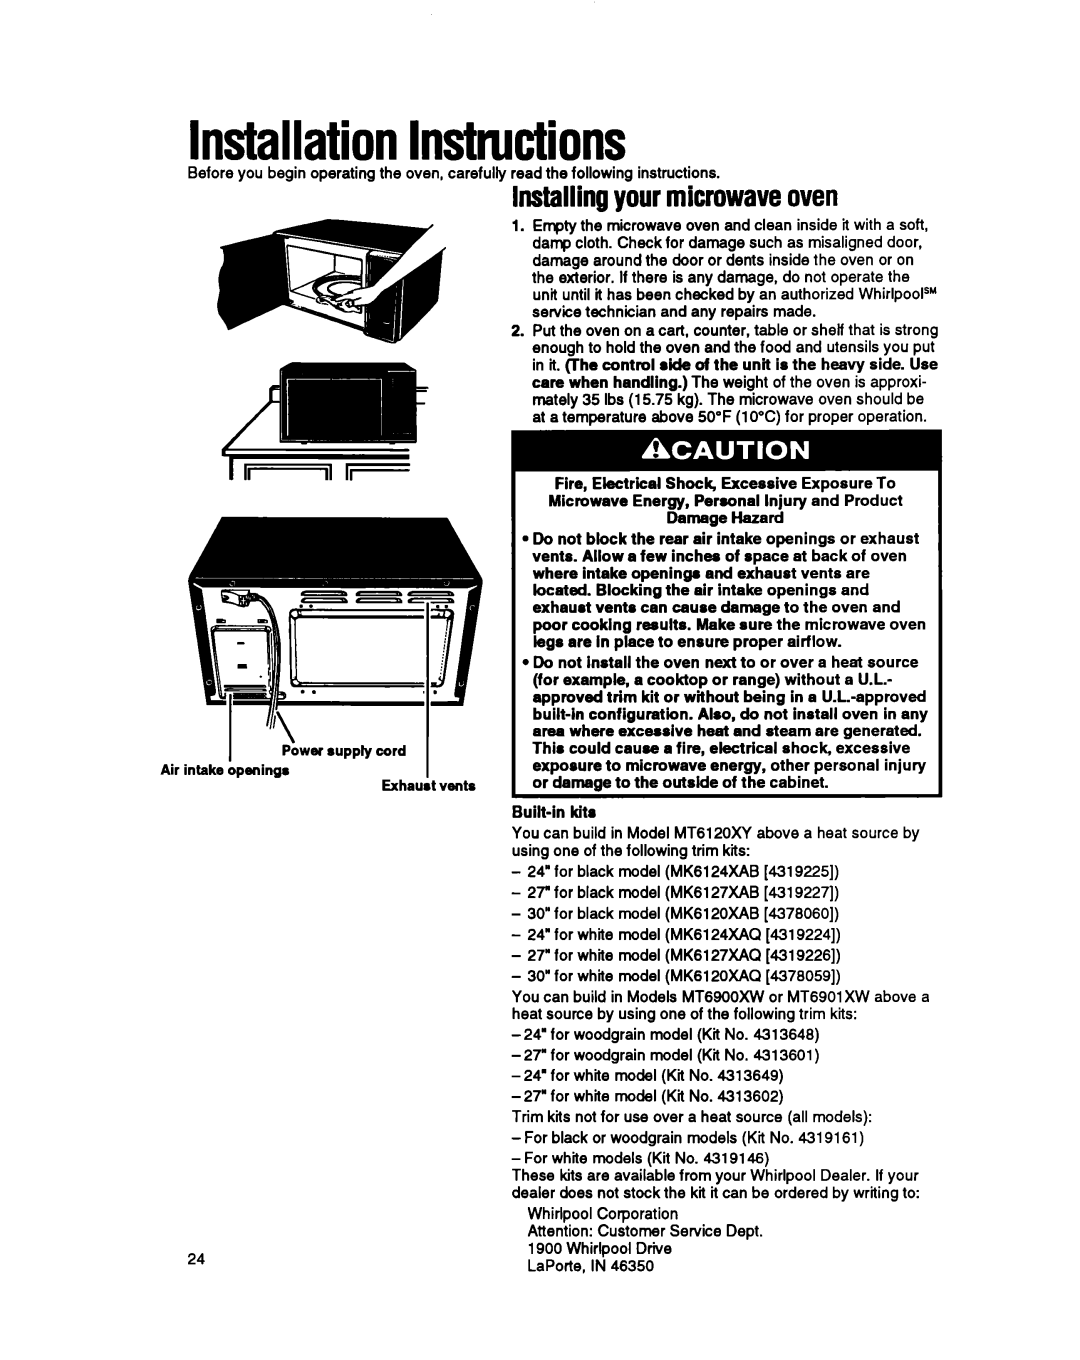 Whirlpool MT6120XY, MT6901XW, MT69OOXW manual InstallationInstructions, Installingyhr microwaveoven 